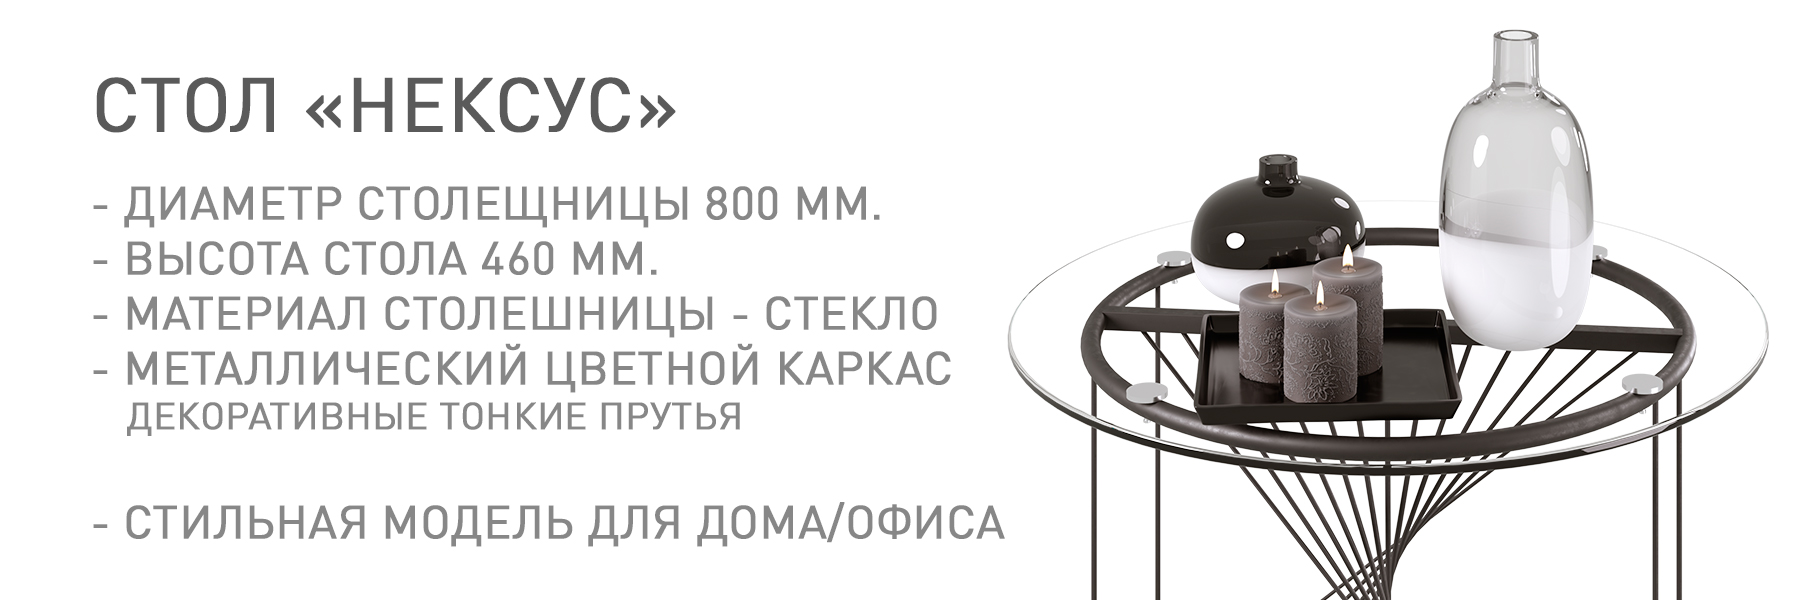 НЕКСУС-МП-ТВ-948582.jpg